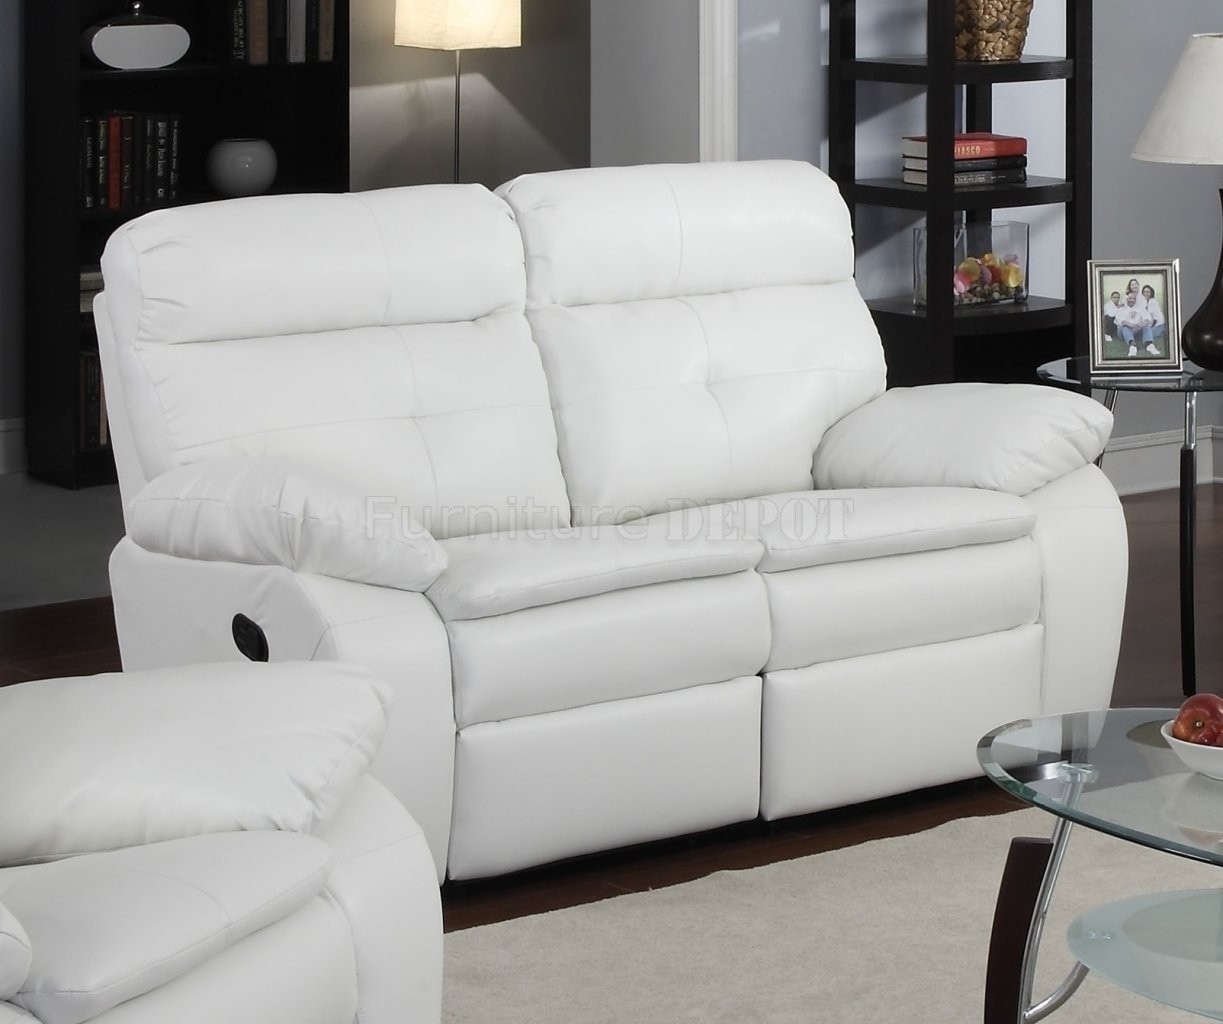 White leather reclining sofa 2